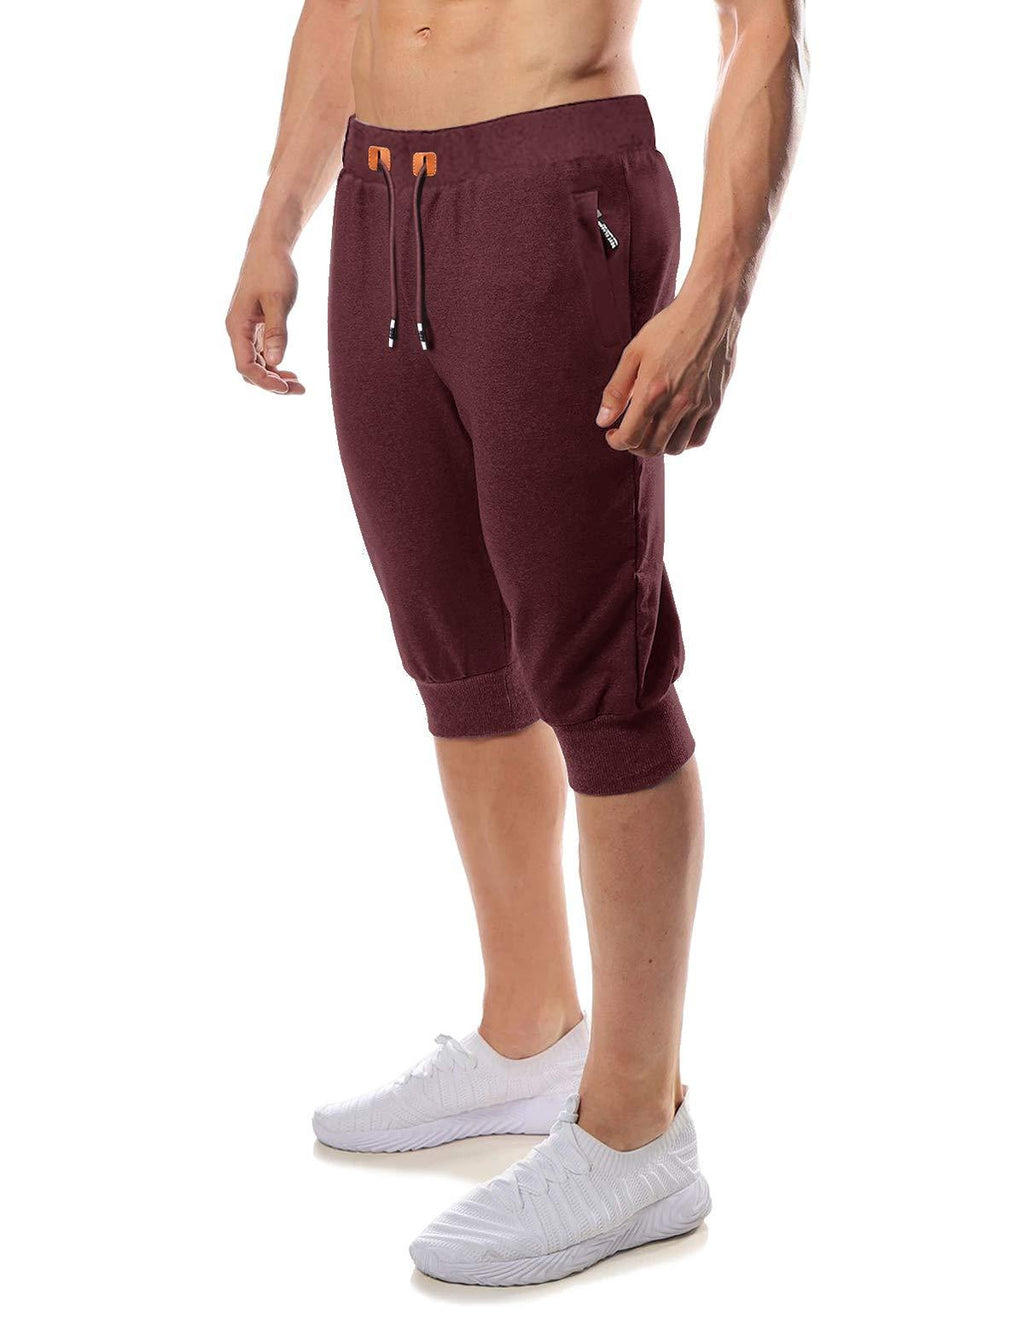 [AUSTRALIA] - MAGNIVIT 3/4 Capri Joggers Breathable Traning Workout Gym Long Shorts with Zipper Pockets Burgundy 32 